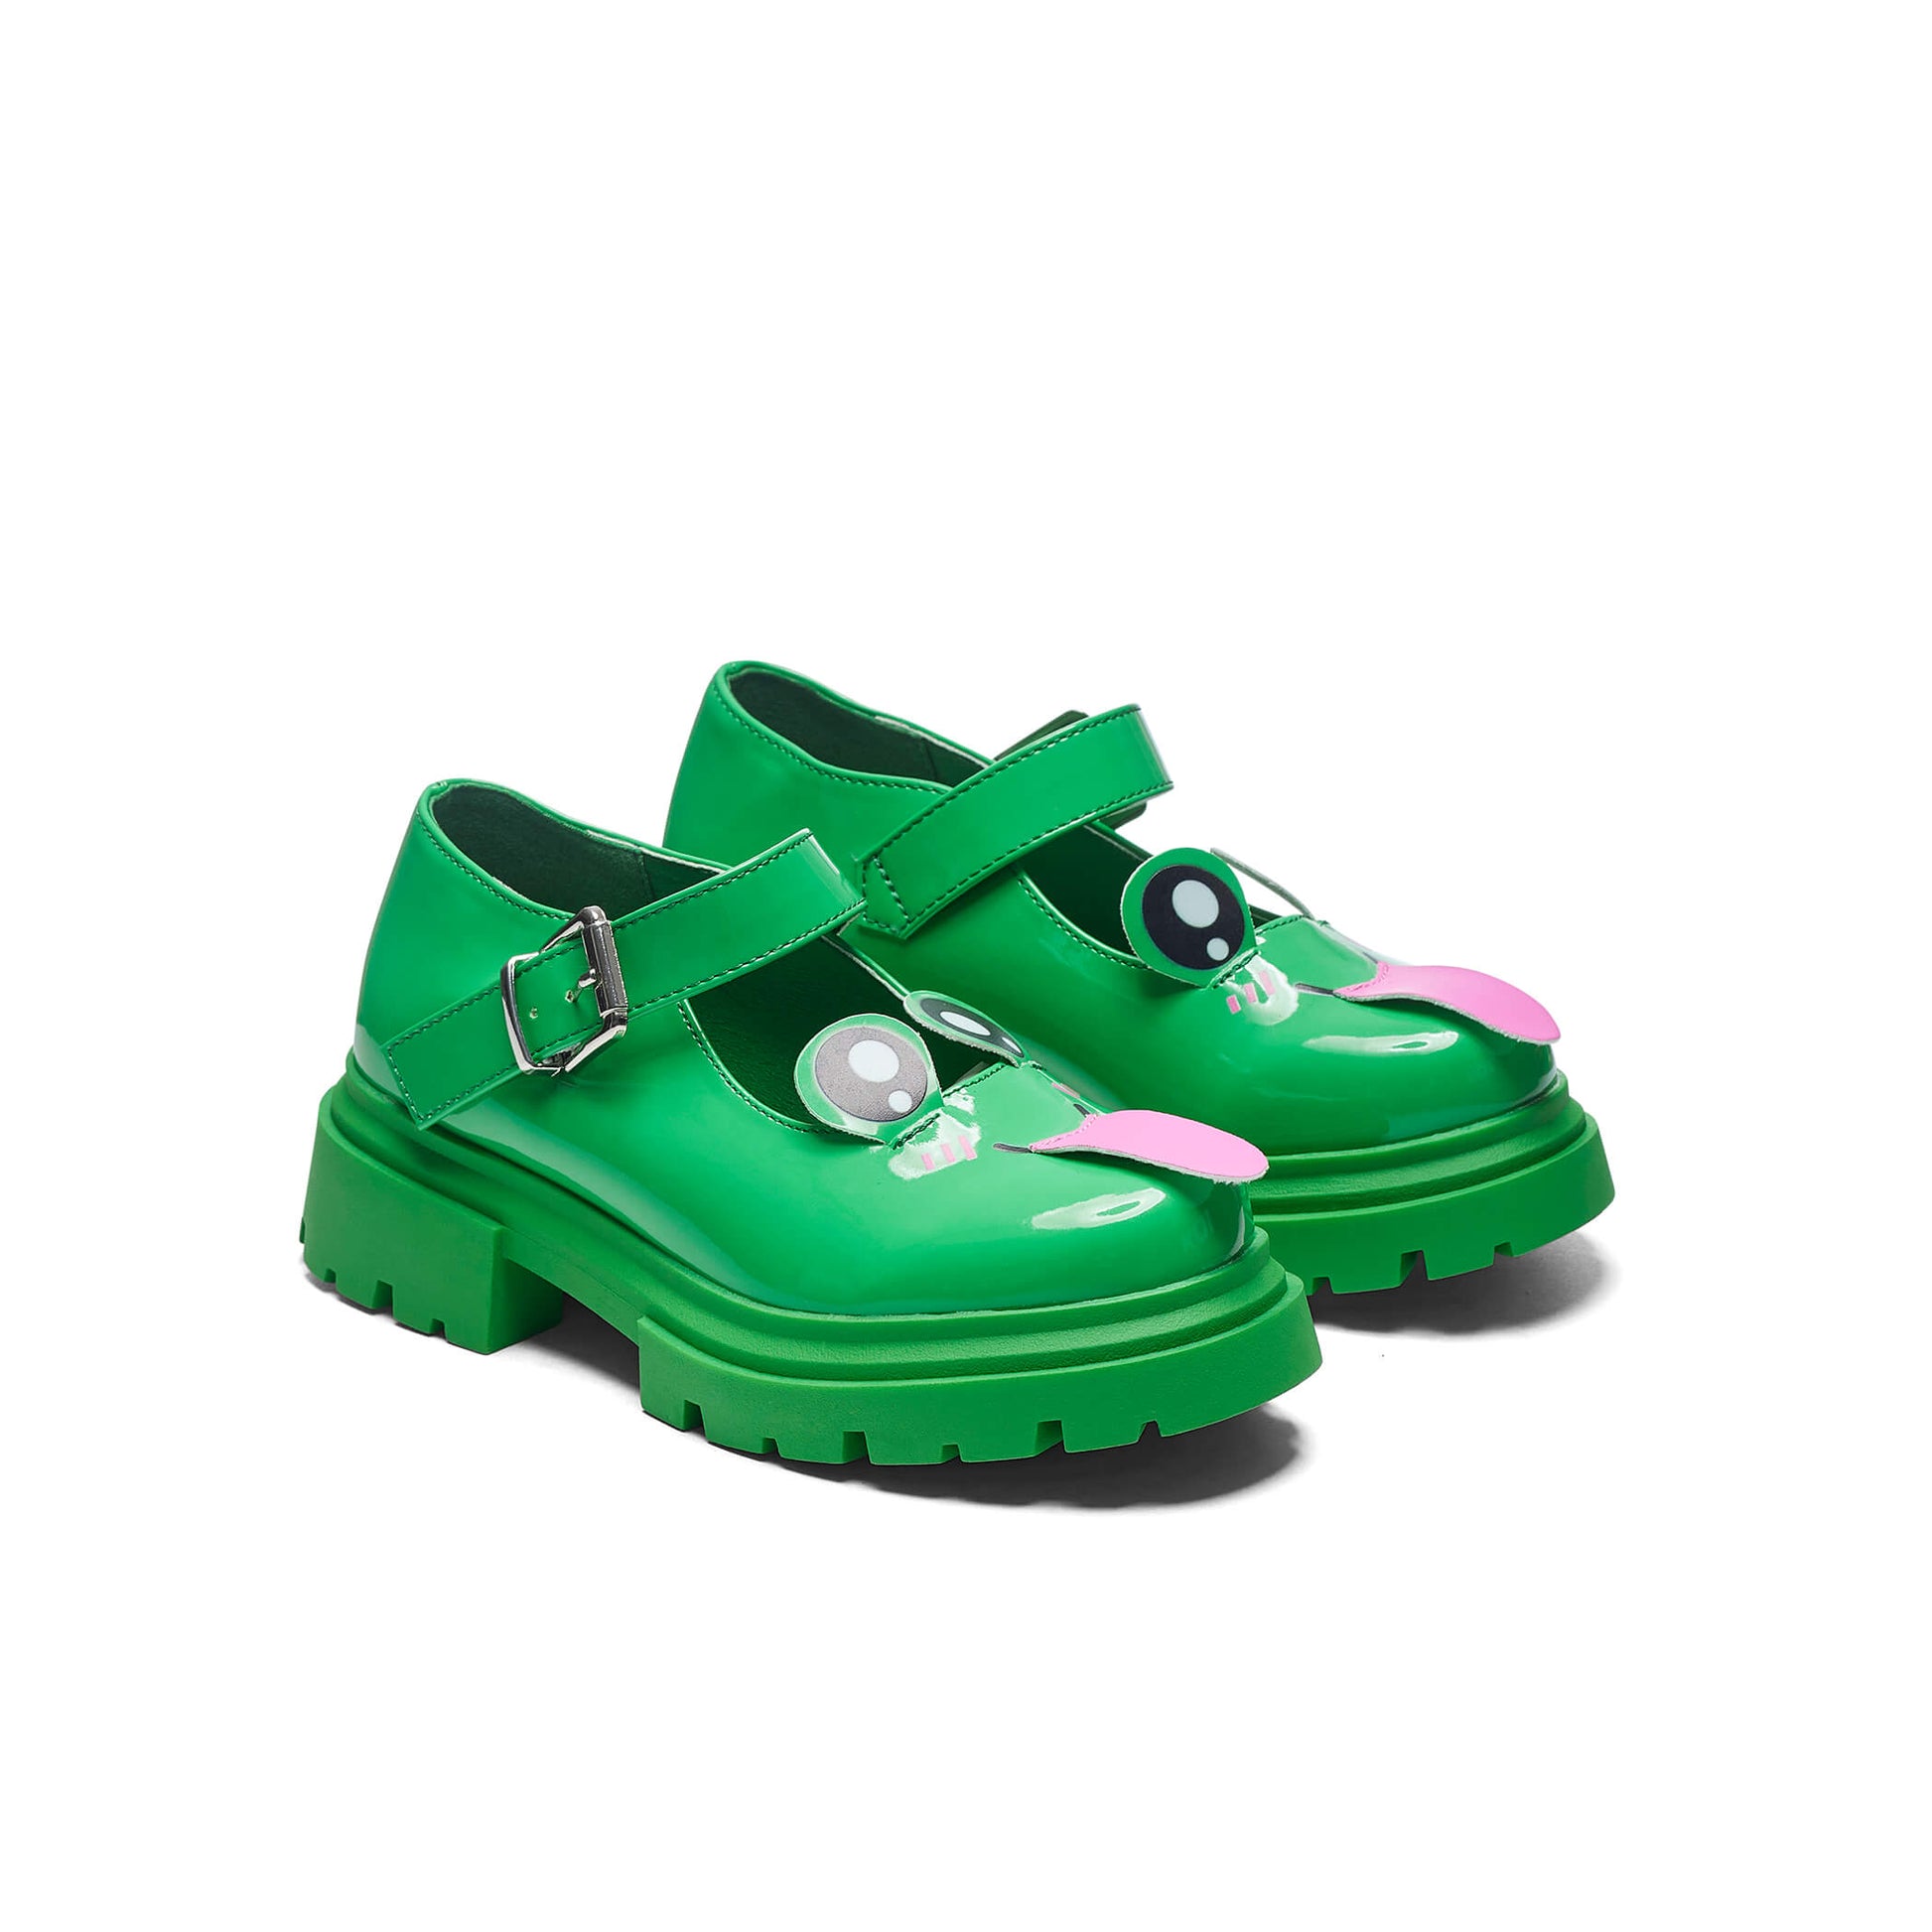 Lil’ Tira Cheeky Frog Mary Janes - Mary Janes - KOI Footwear - Green - Three-Quarter View